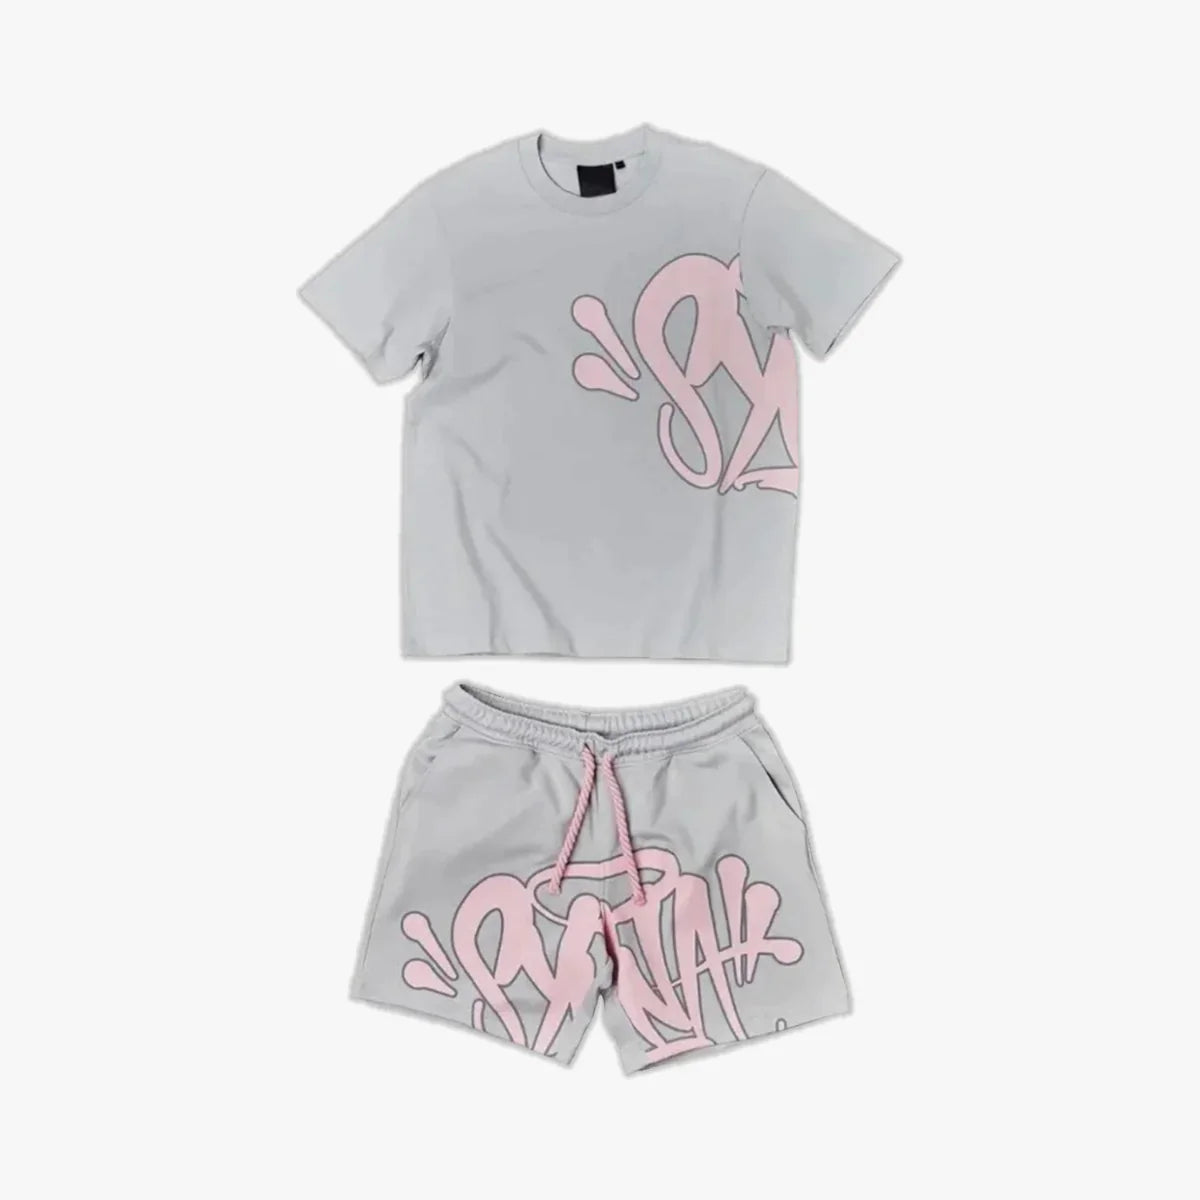 Synaworld T-shirt & Short Set - Grey/Pink